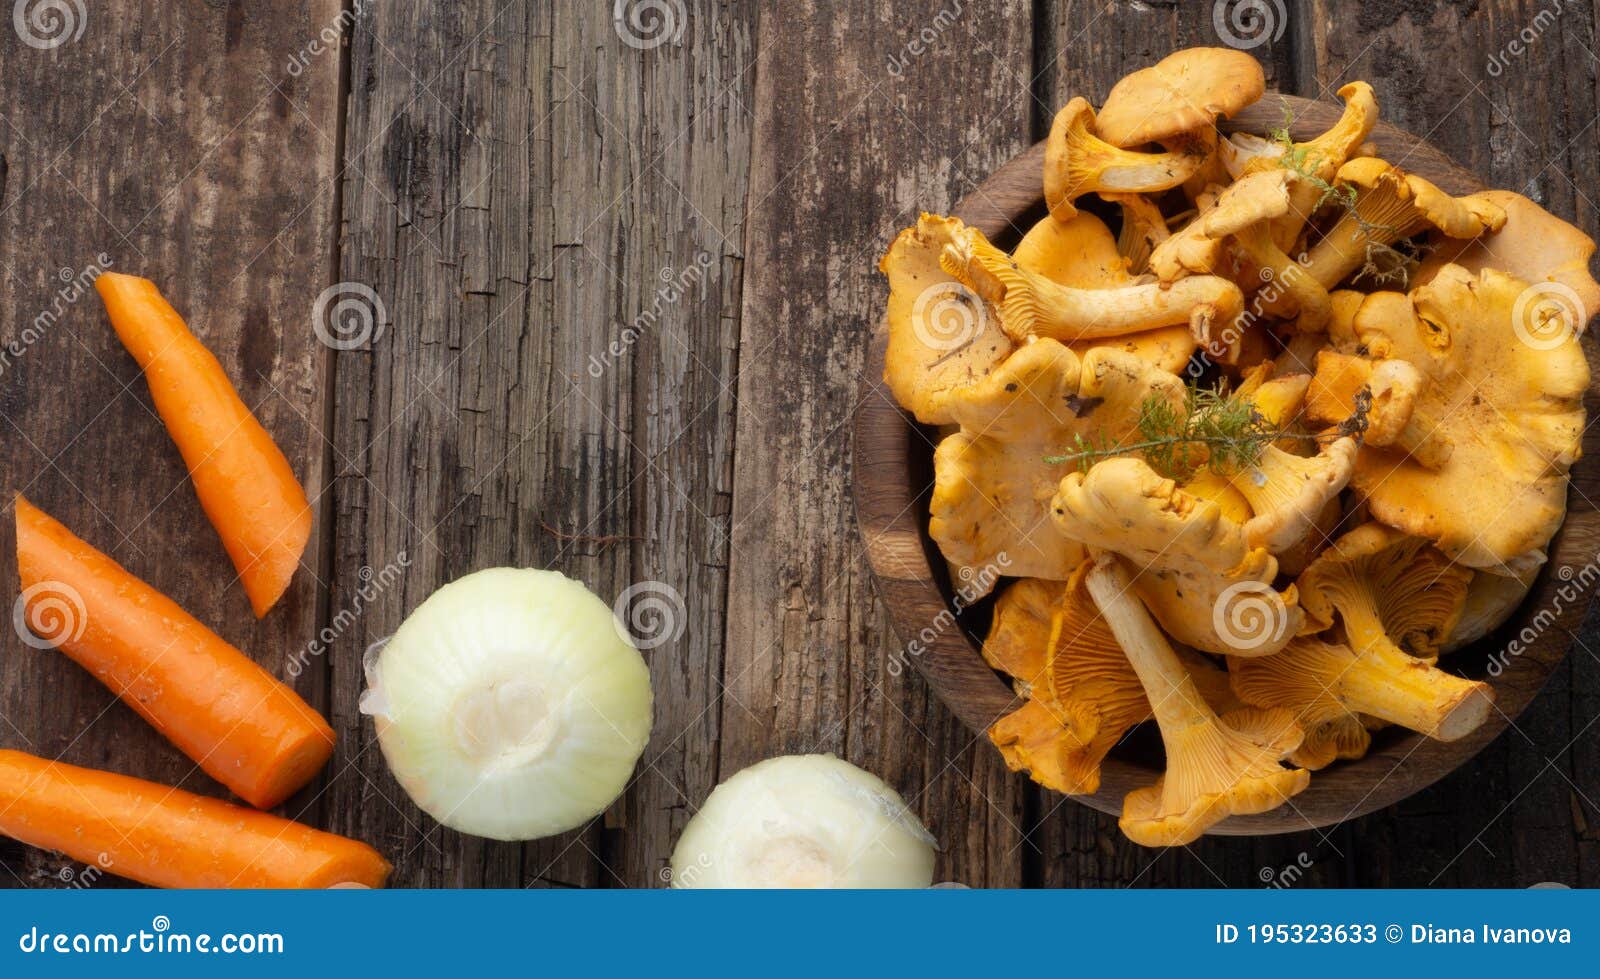 ingredientes for vegan chanterelles mushroom soup